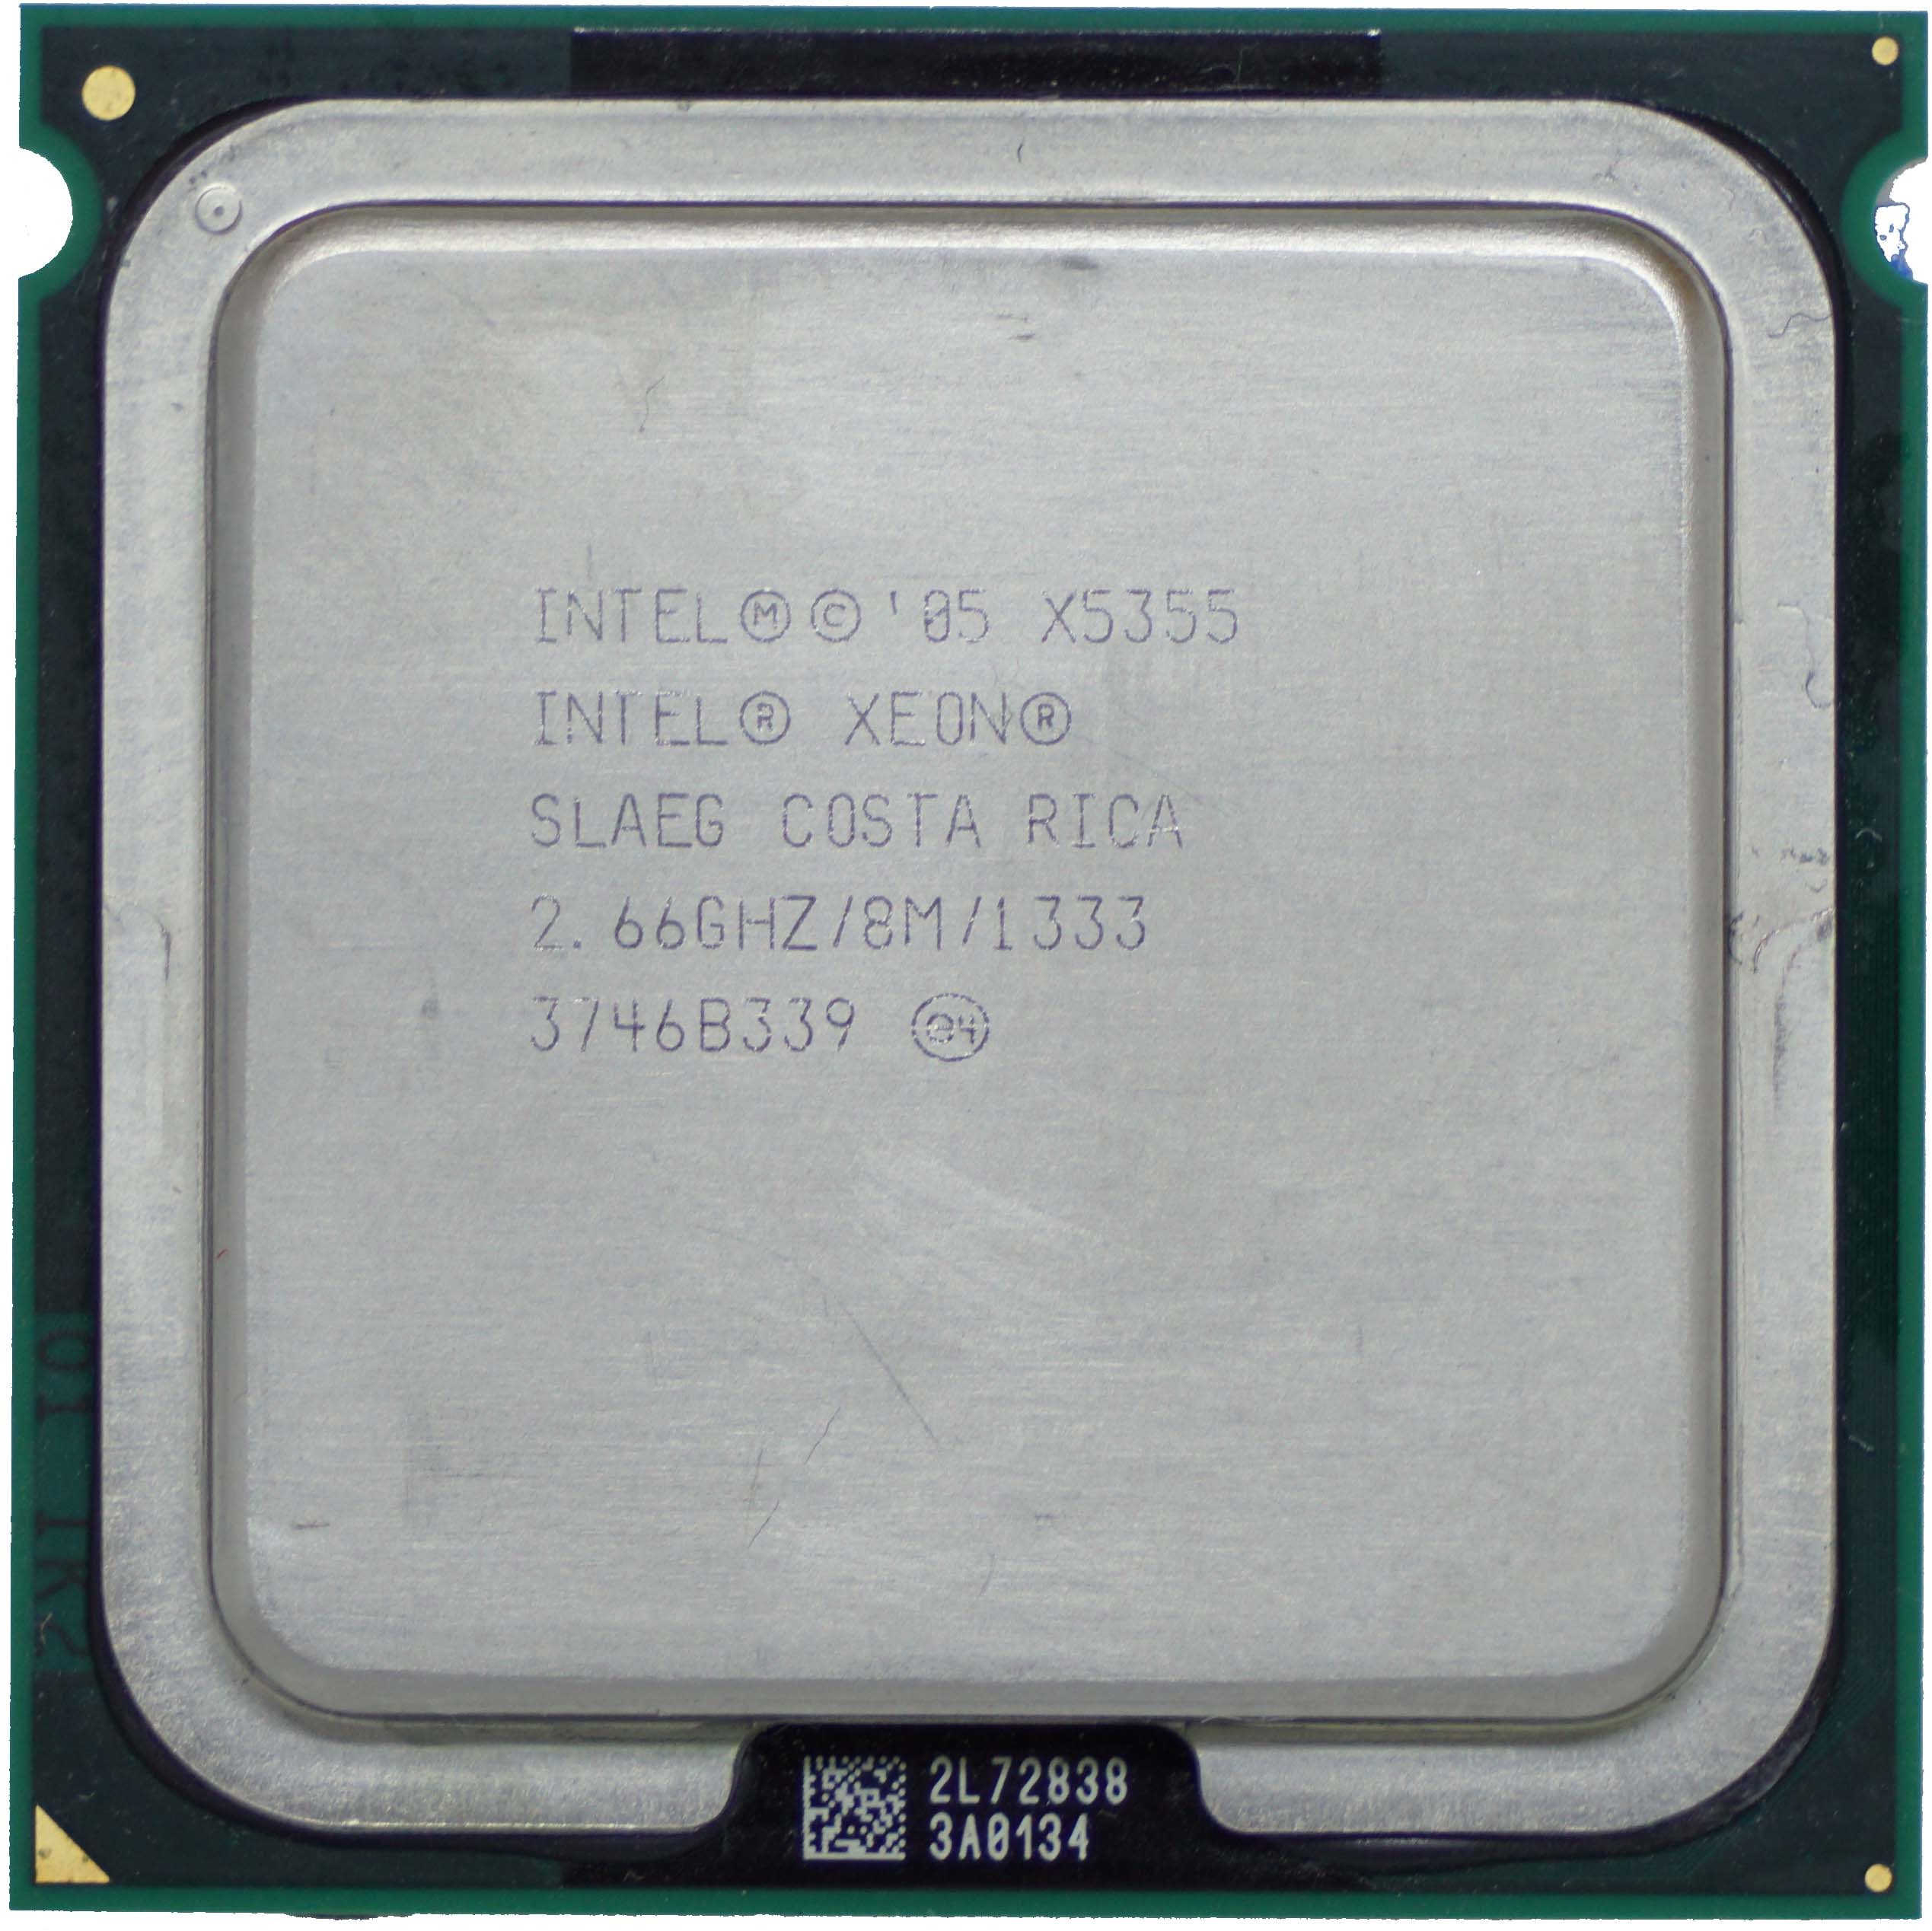 Intel Xeon X5355 (SLAEG) 2.66Ghz Quad (4) Core LGA771 120W CPU